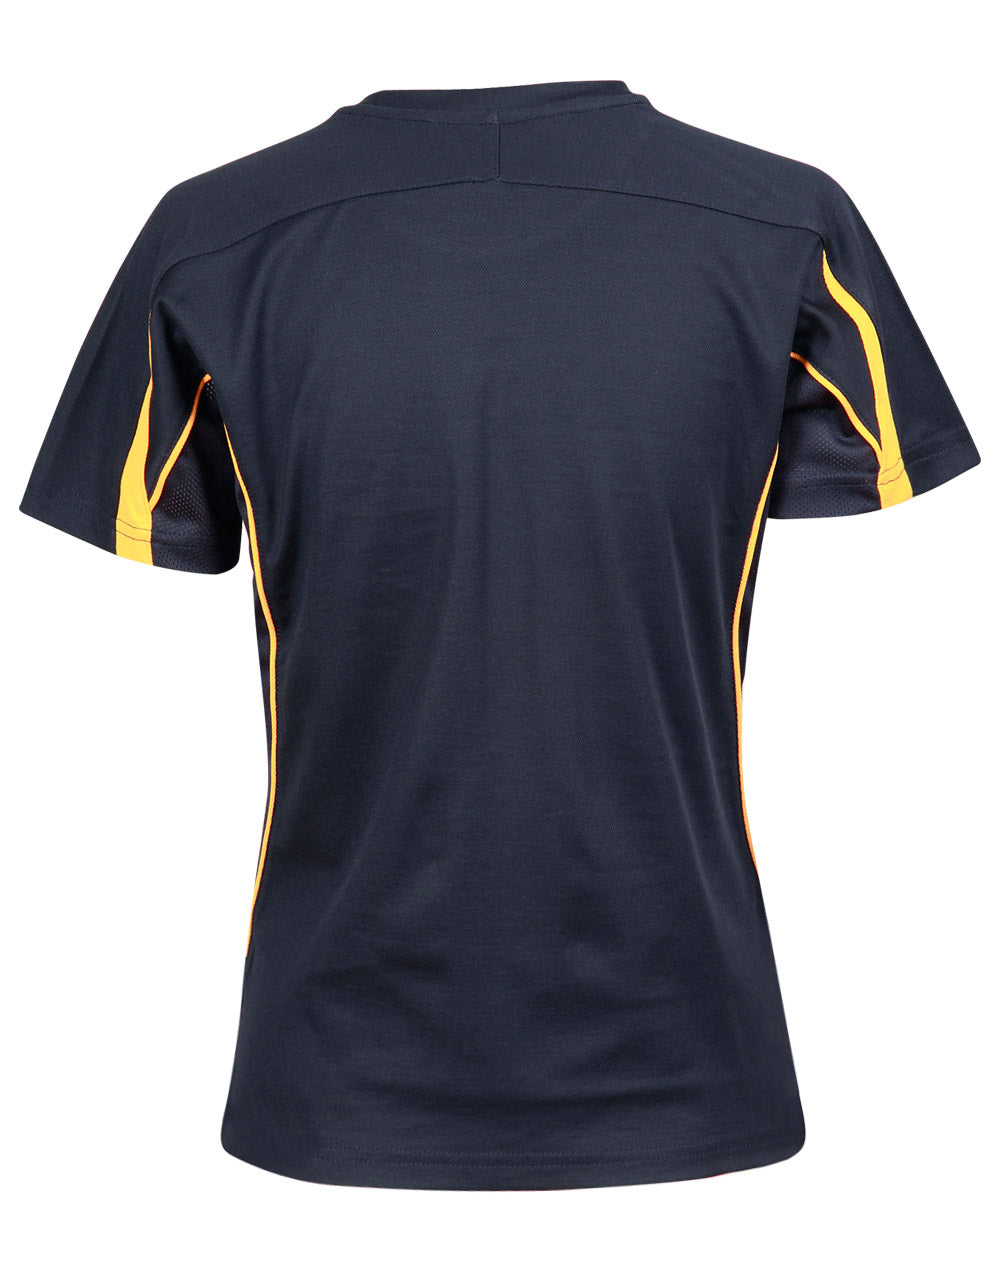 Winning Spirit Ladies' Truedry Short Sleeve Fashion Tee Shirt (TS54)